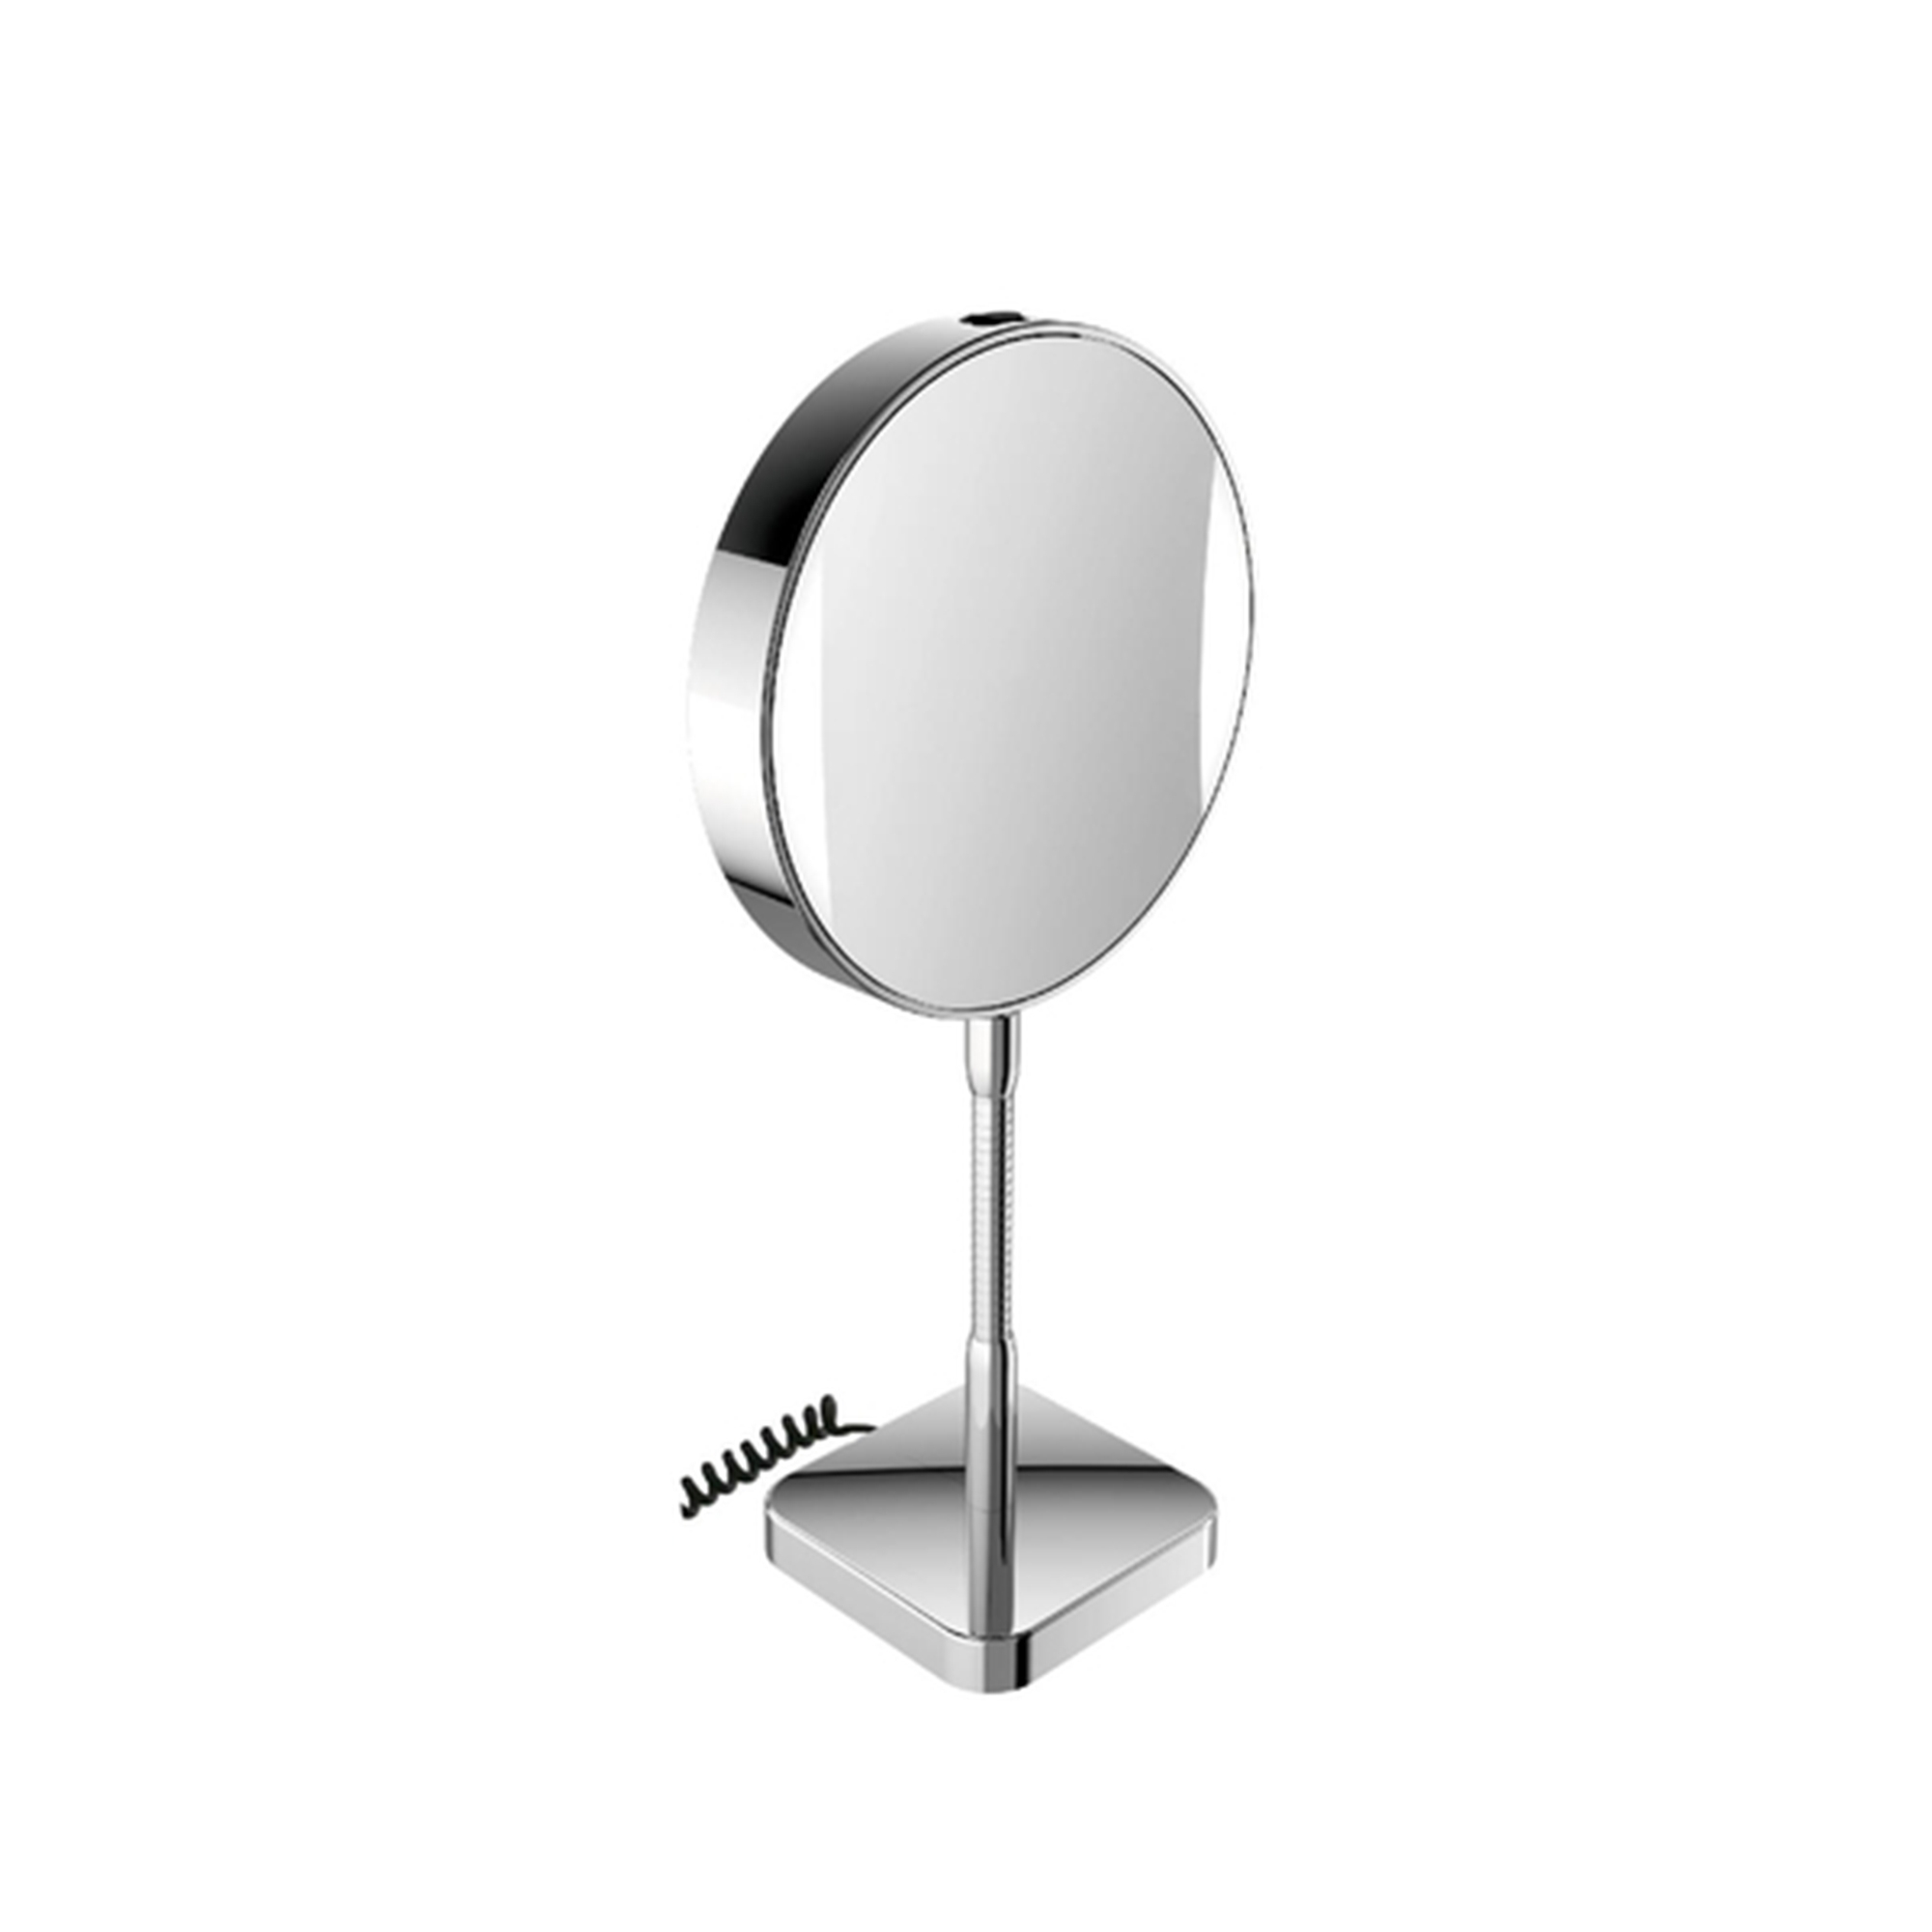 Imago 1095.060.13 Magnifying Makeup Mirror